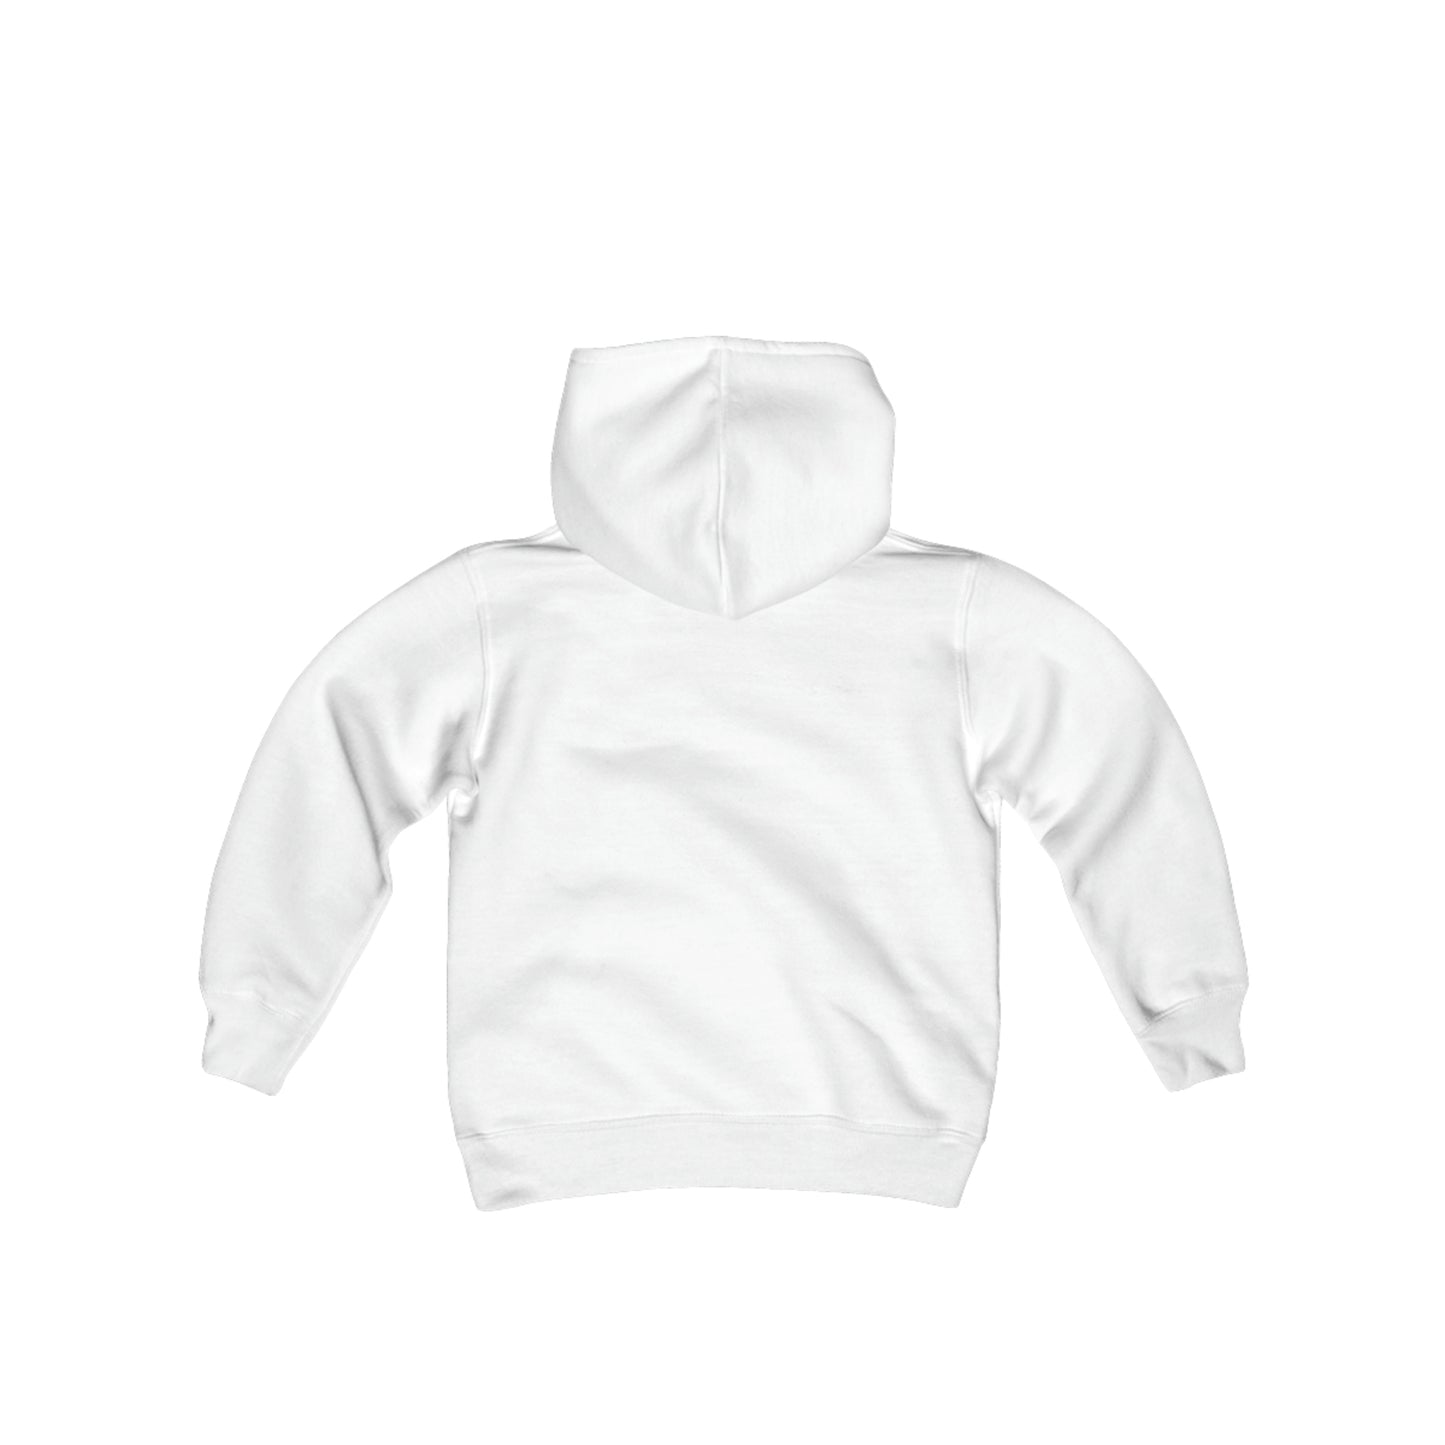 YOUTH - Give me an F - Freeburg Midgets Logo Youth Heavy Blend Hooded Sweatshirt